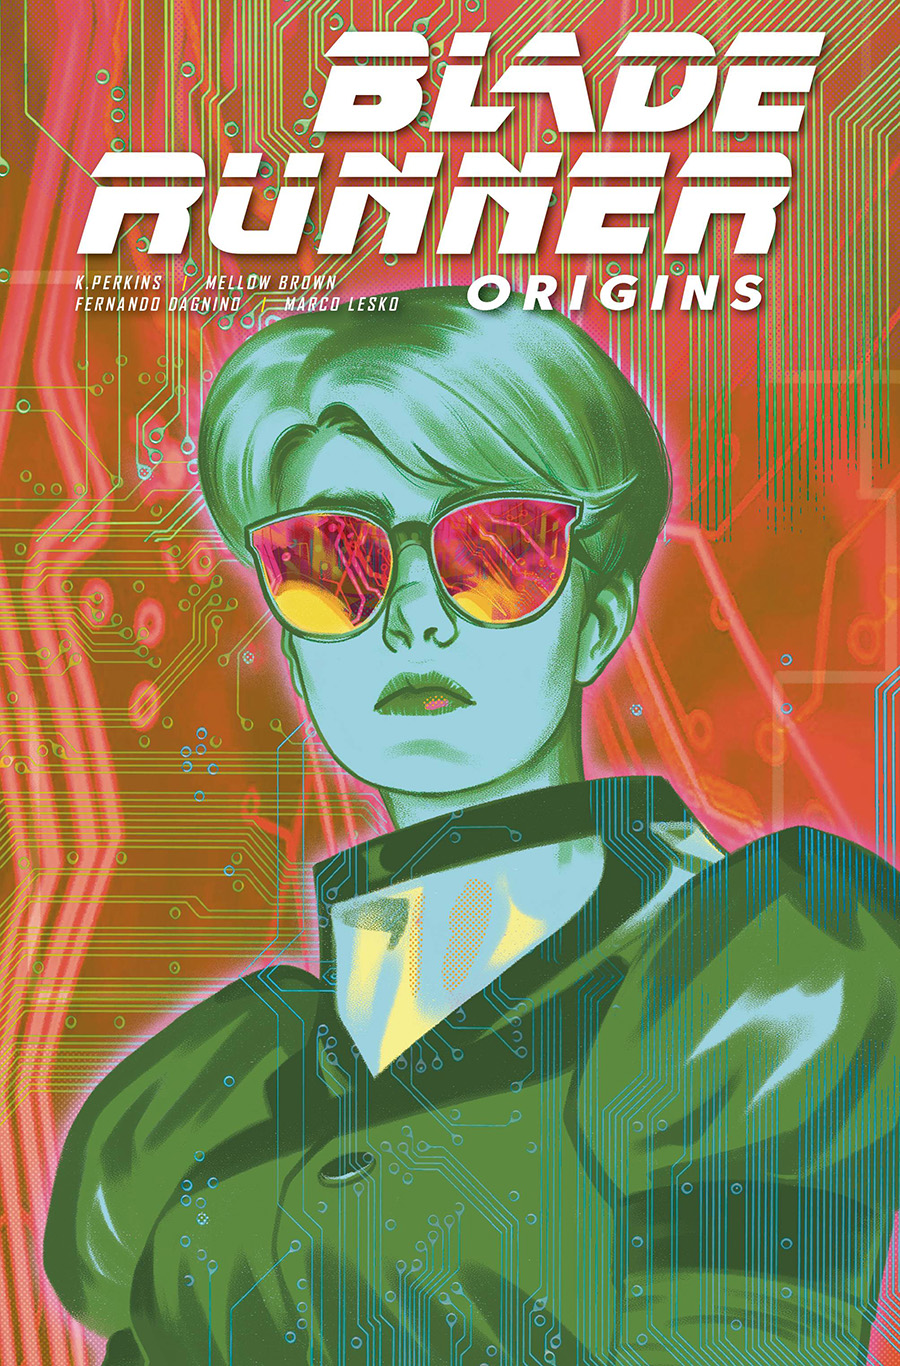 Blade Runner Origins #11 Cover A Regular Veronica Fish Cover